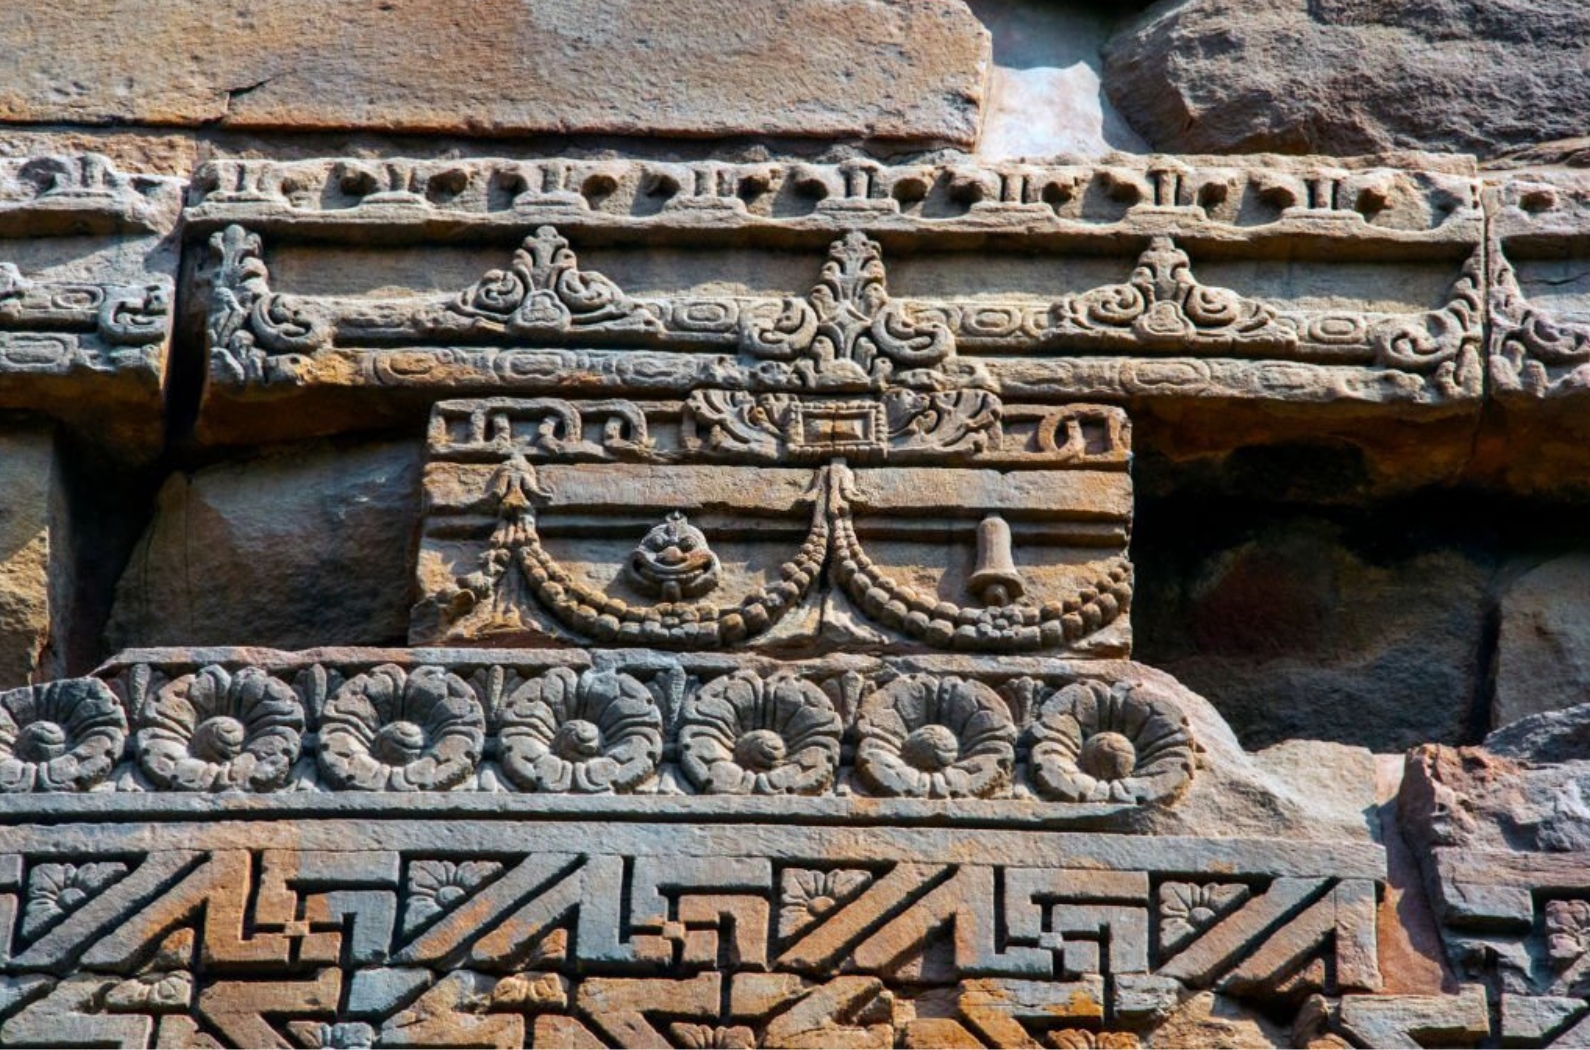 The design on the wall of the Dhamekh at Sarnath, Varanasi.